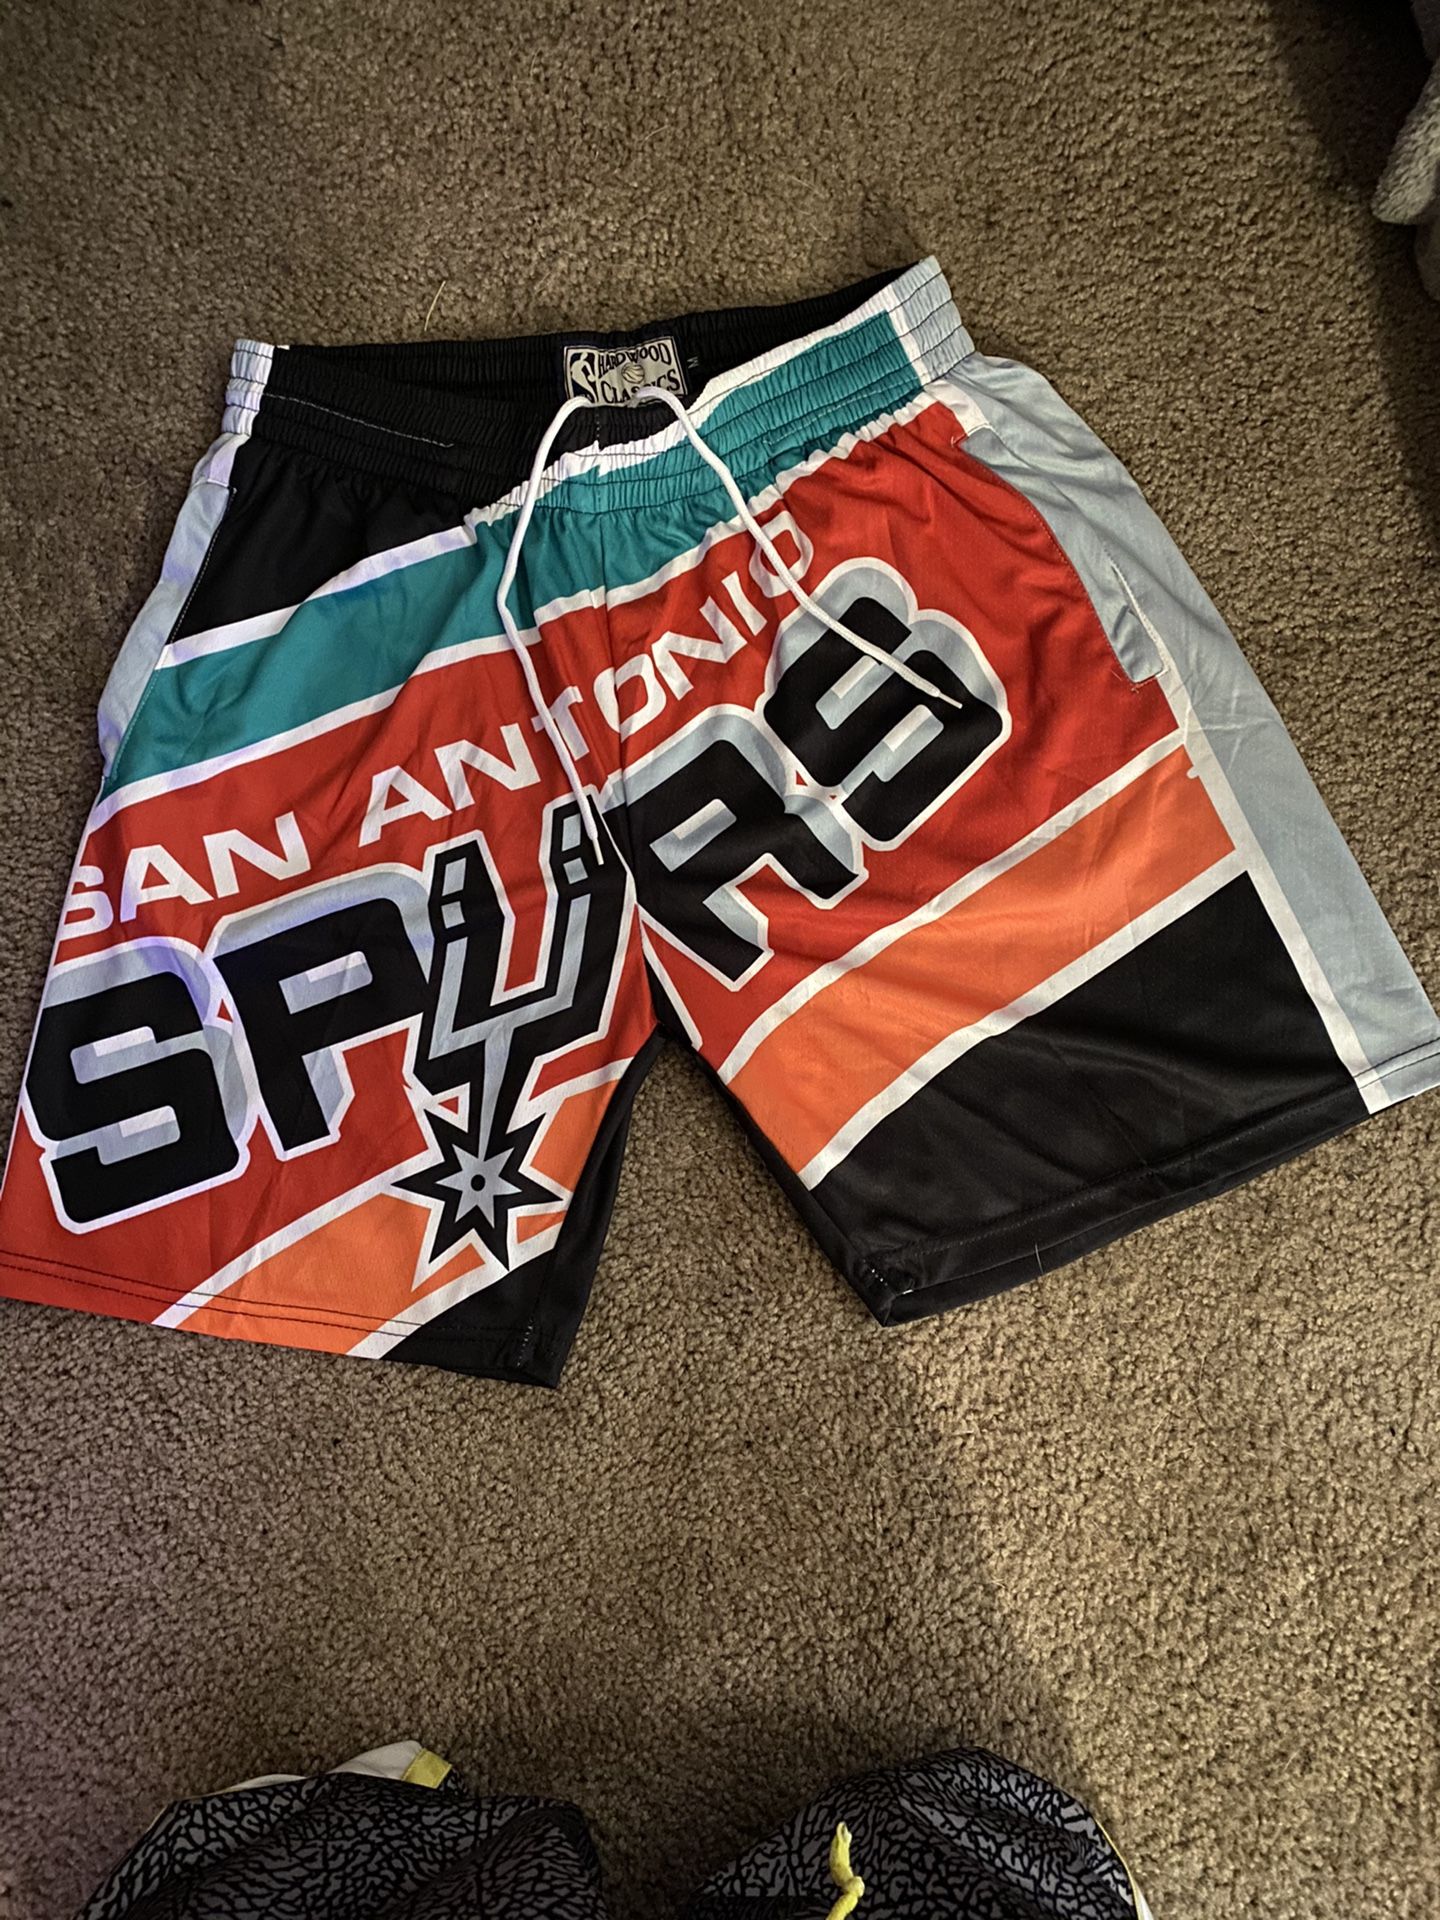 San Antonio Spurs shorts size Medium